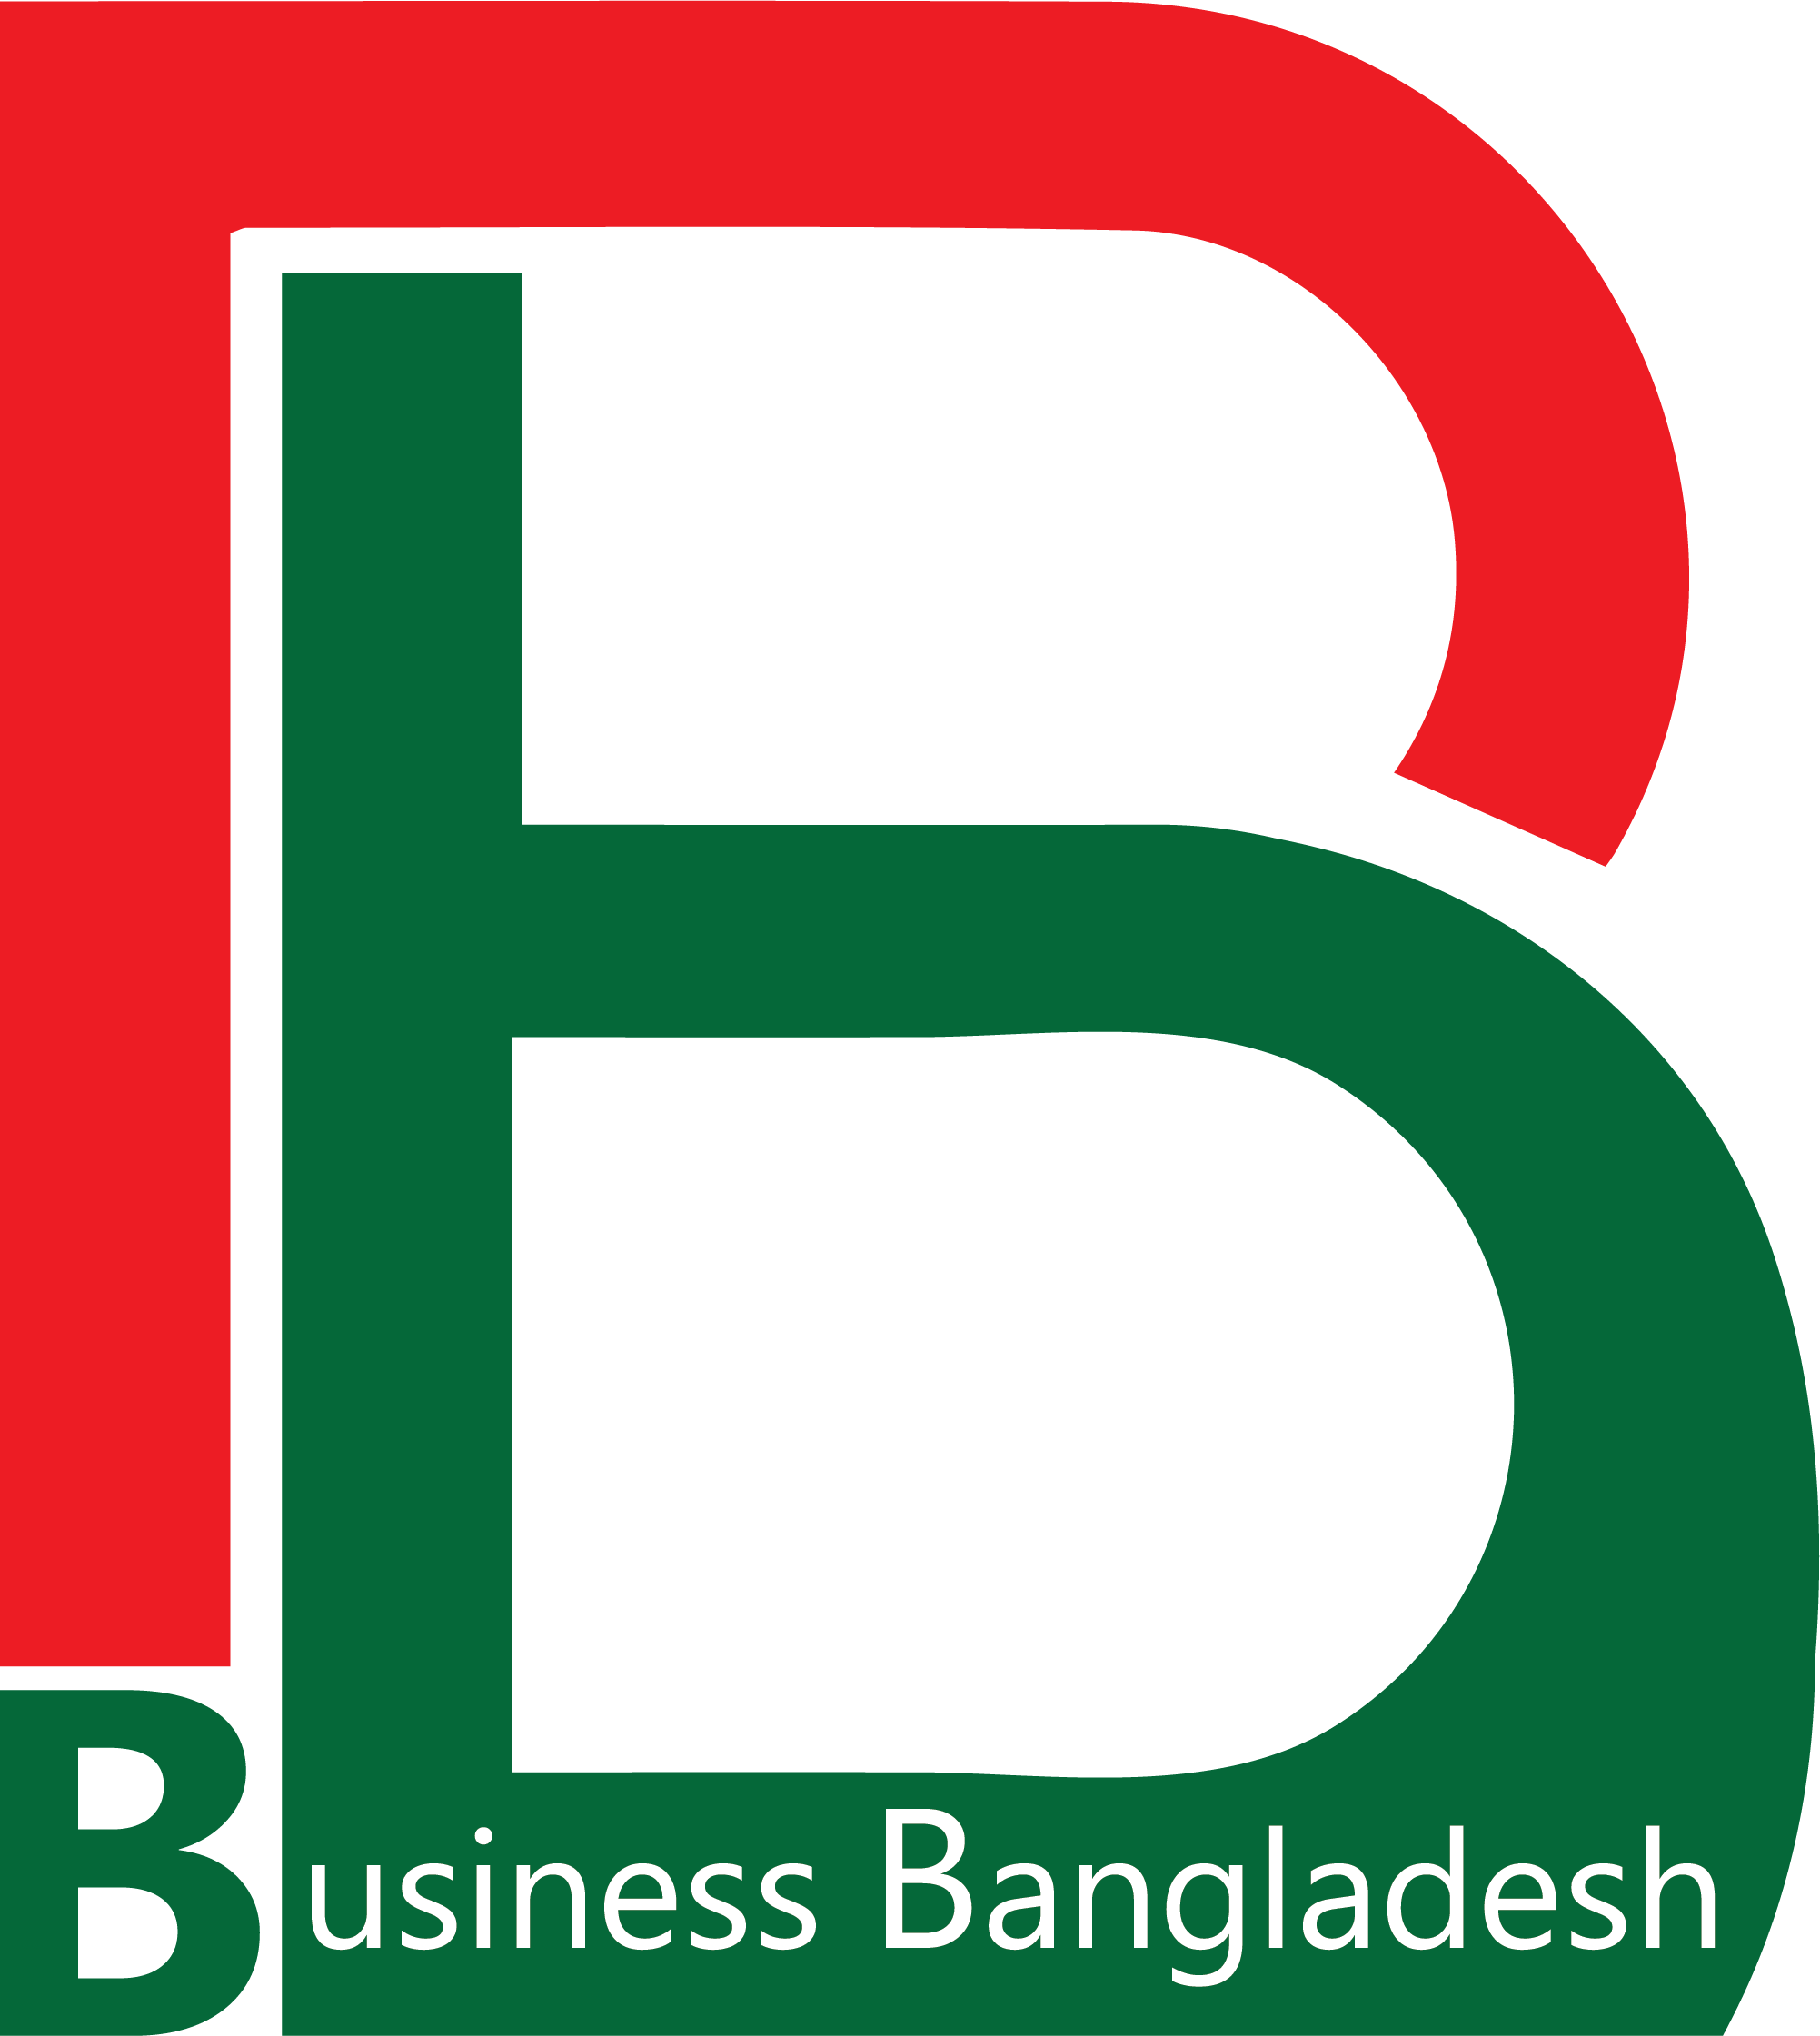 bussiness bangladesh logo